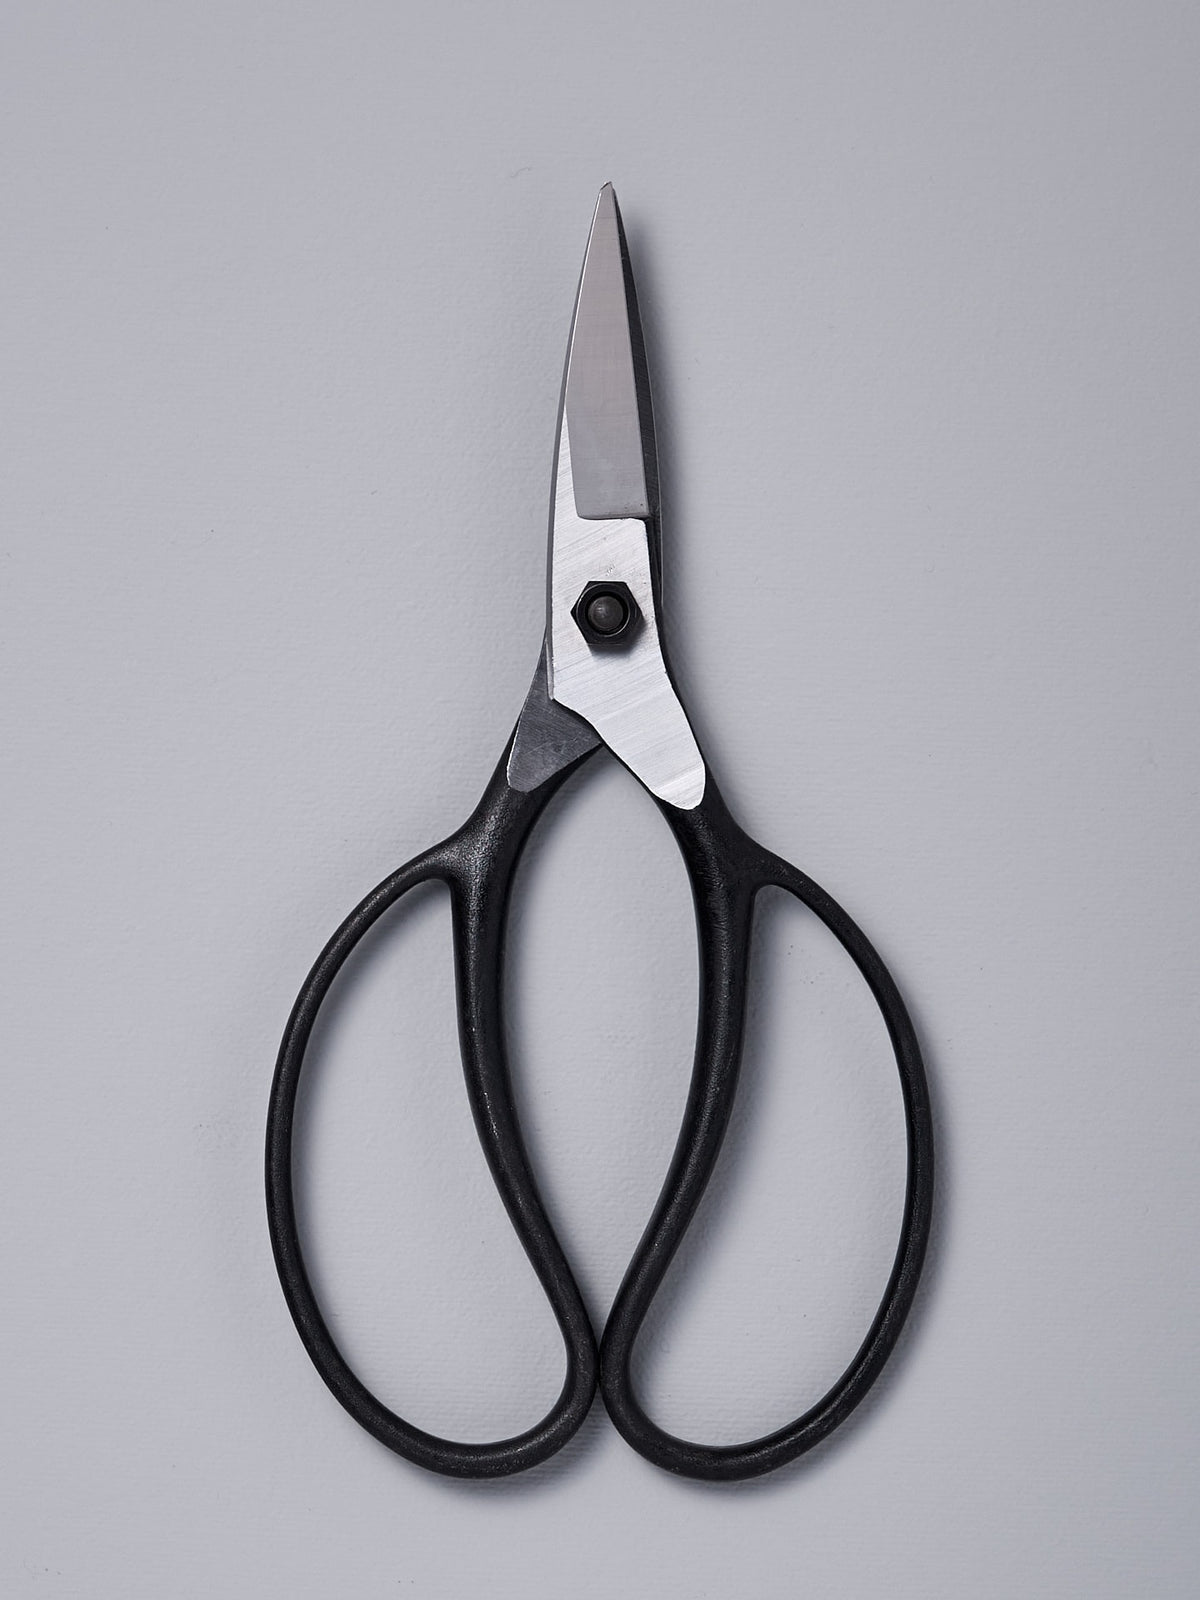 A pair of Okatsune Garden Scissors №221 – Small on a gray background.